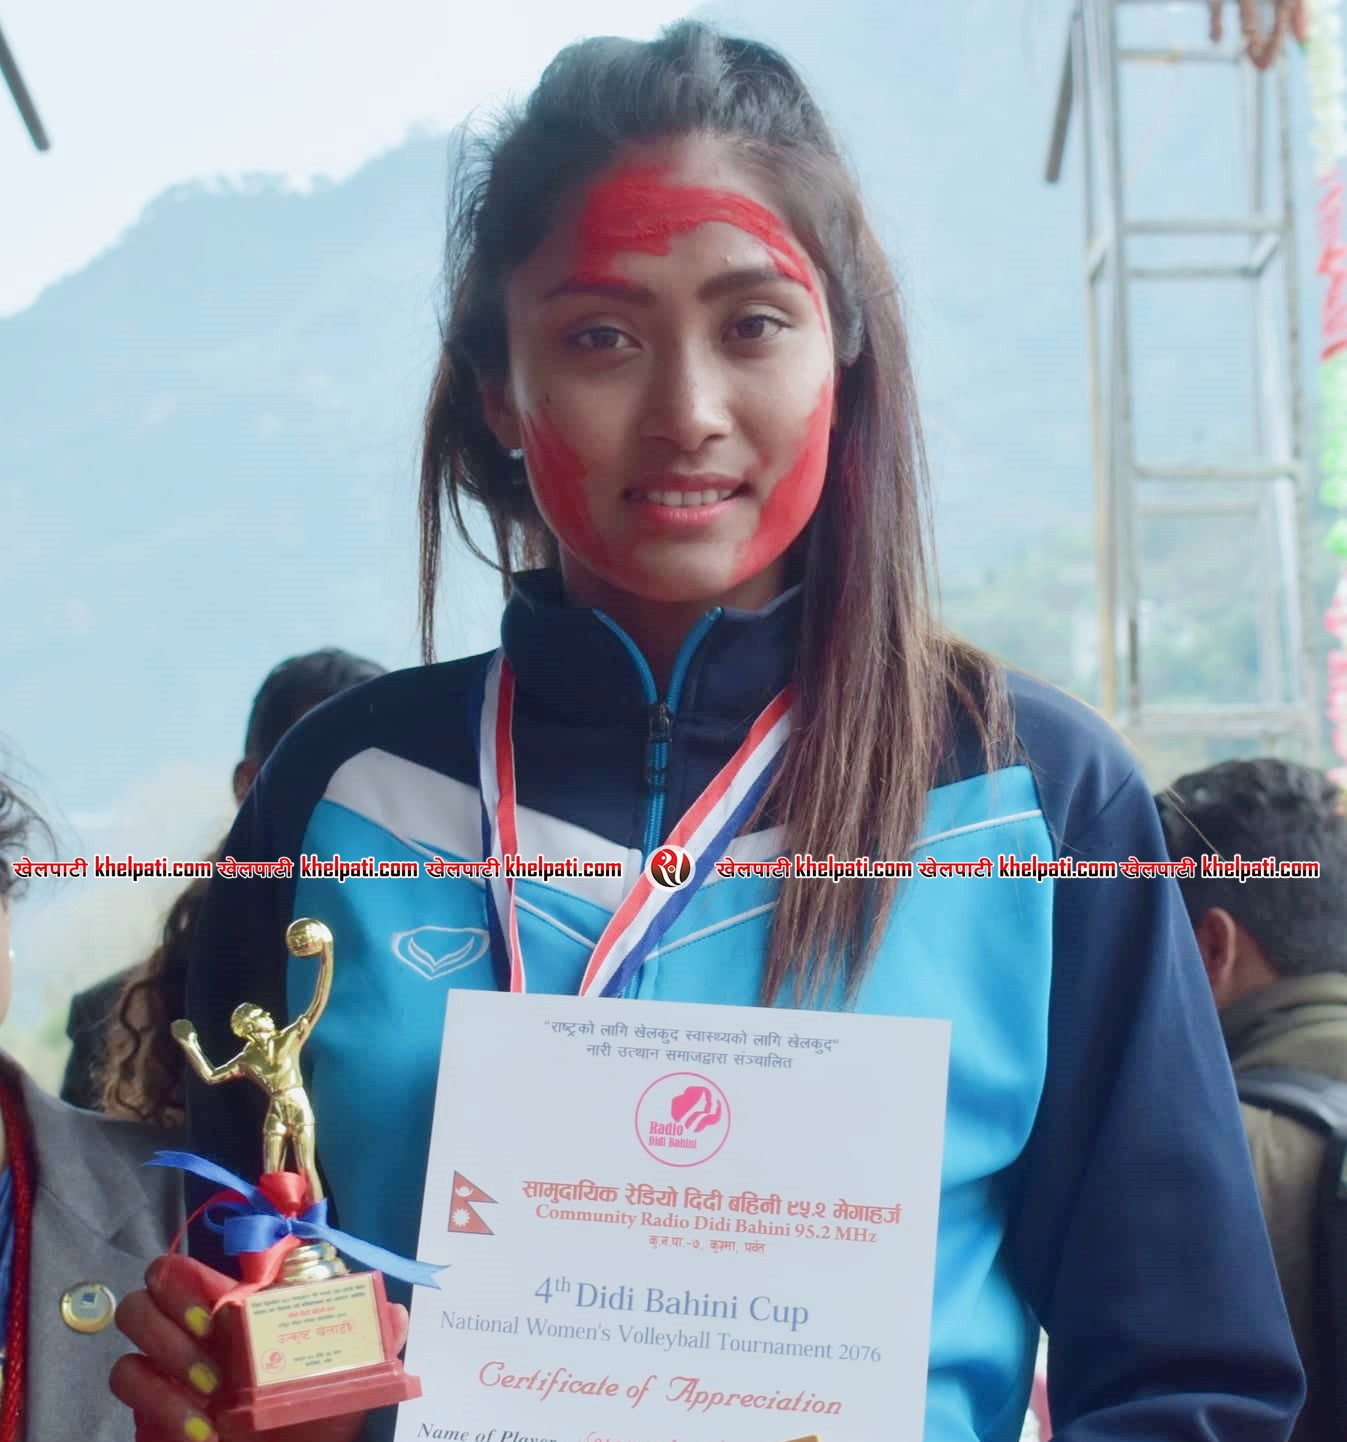 दिदीबहिनी कप महिला भलिबलमा सरस्वती सर्वोकृष्ट